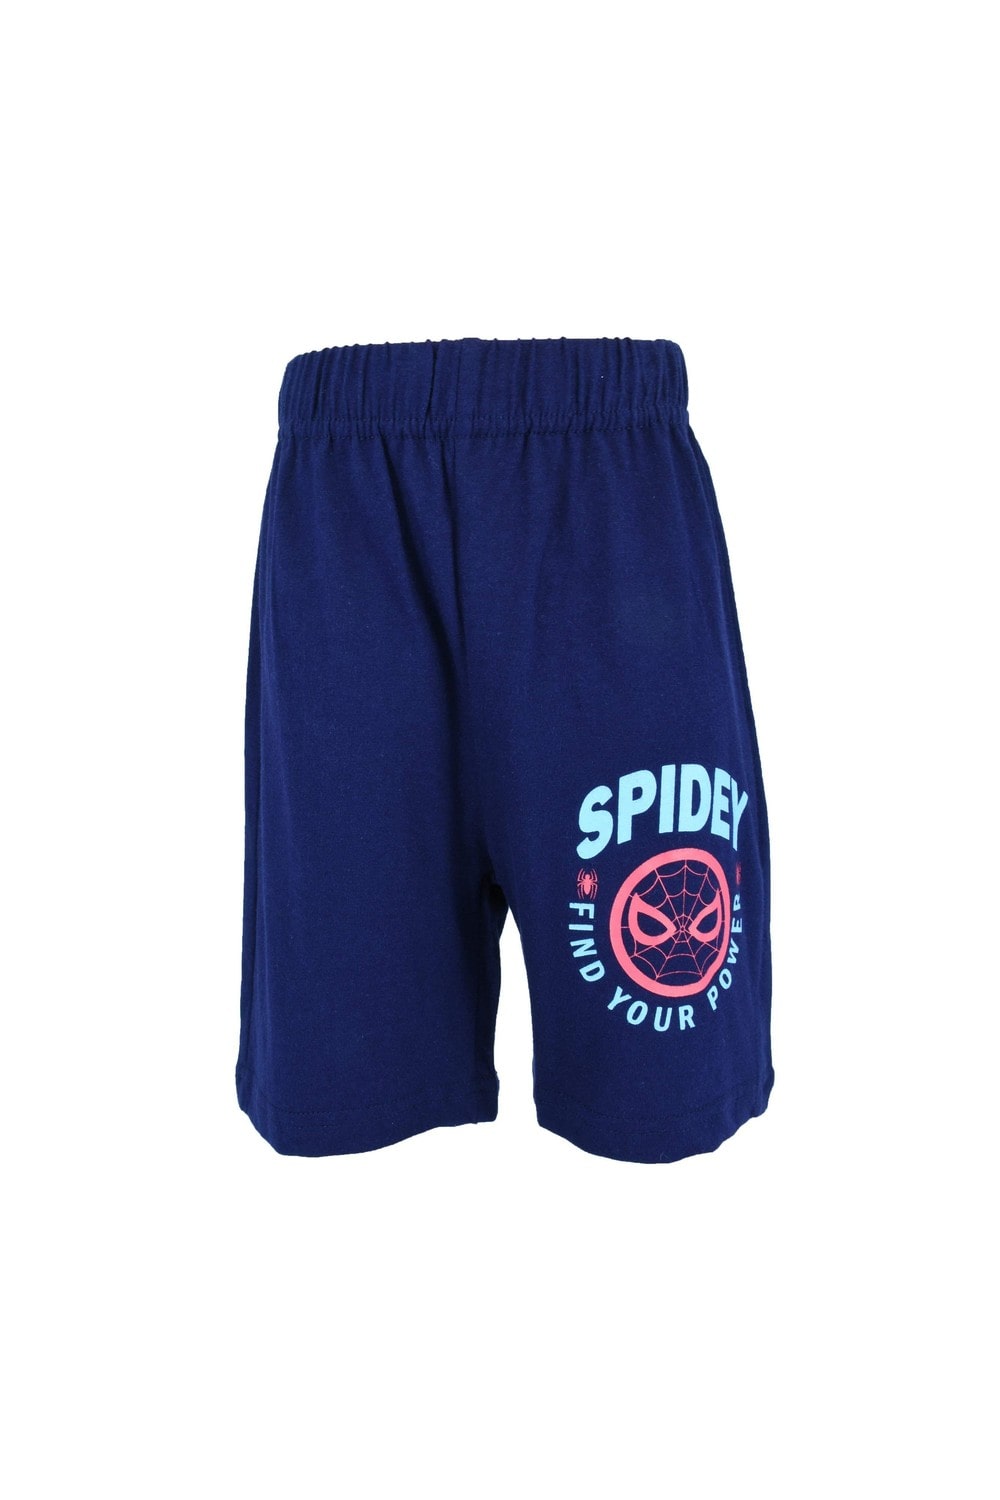 Spiderman Marvel®️ Character Boys Short For Kids Marvel Anti-Heat rash Cool Graphic printed Short - Dealz Souq